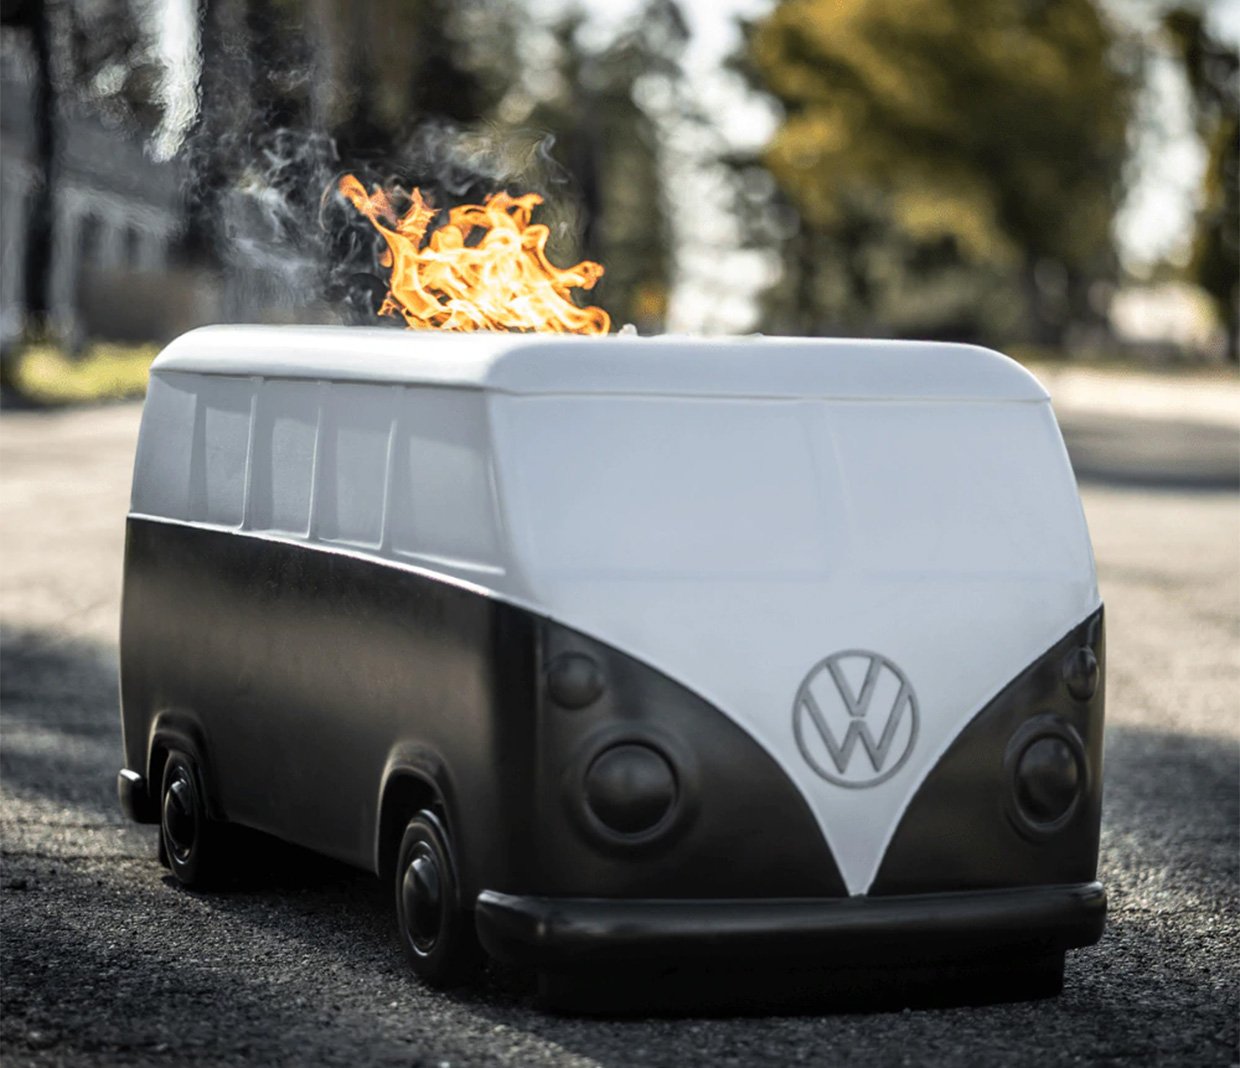 Volkswagen Microbus Fire Pit